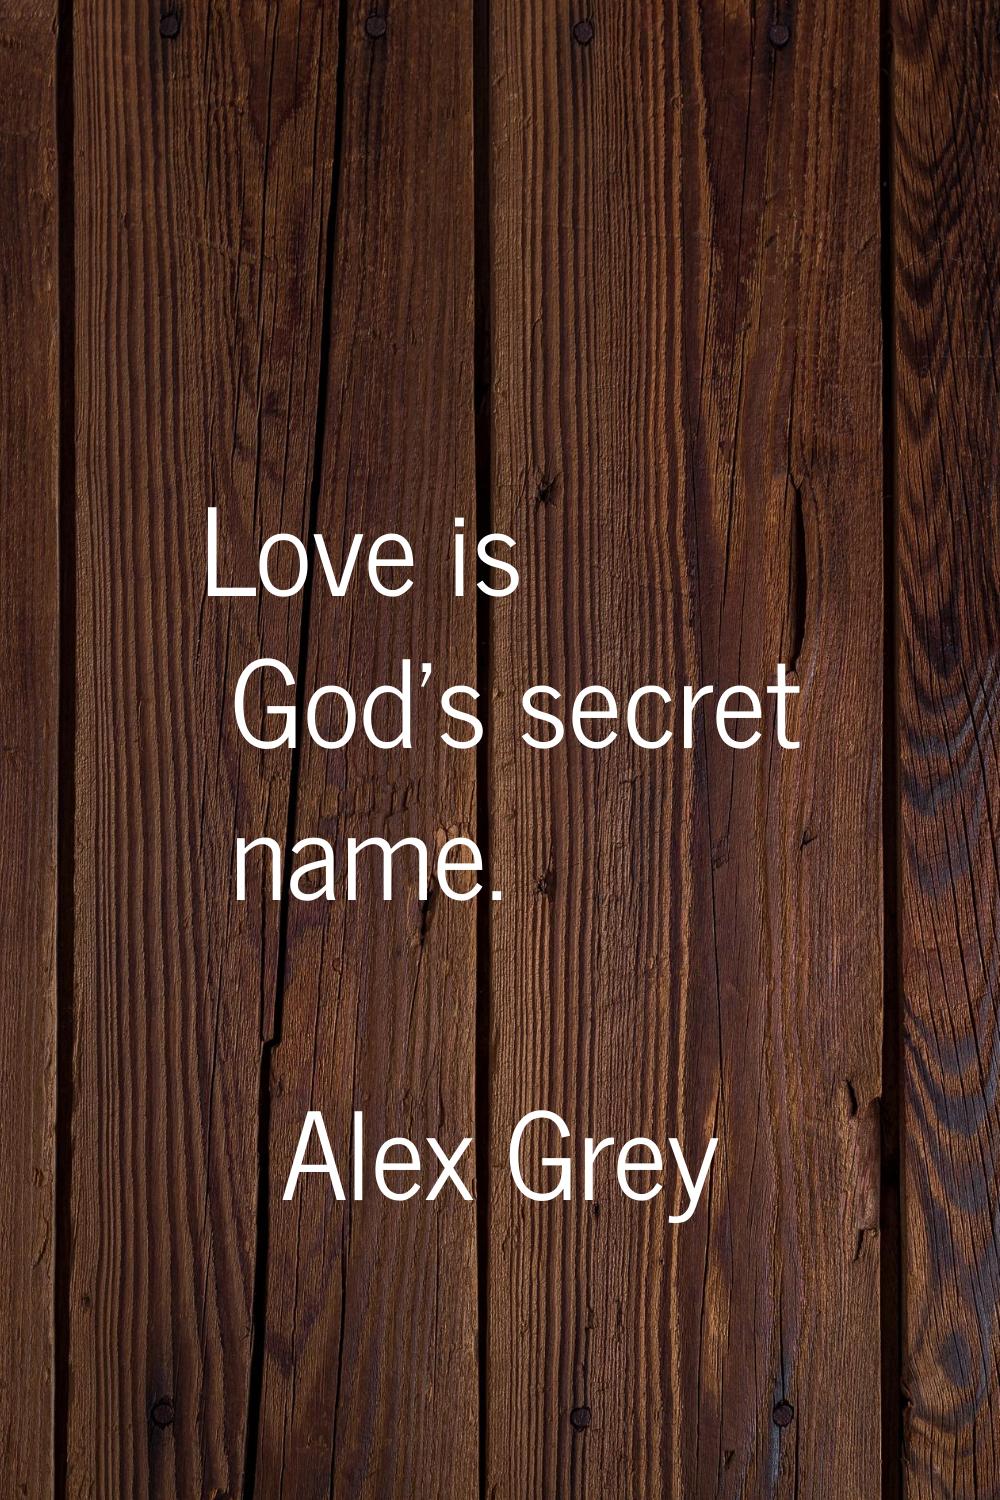 Love is God's secret name.